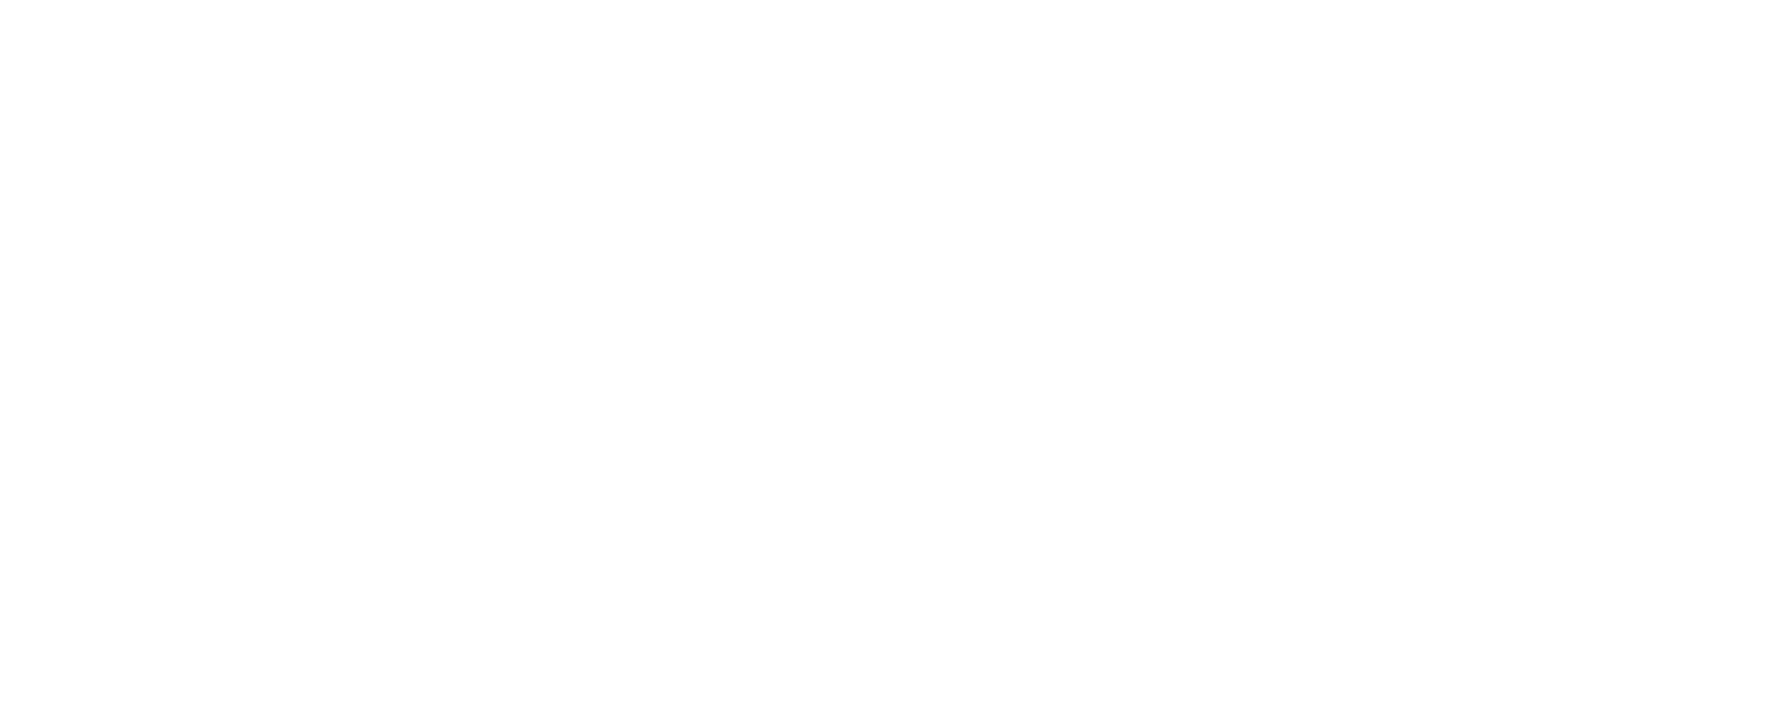 Owner's Golf Club